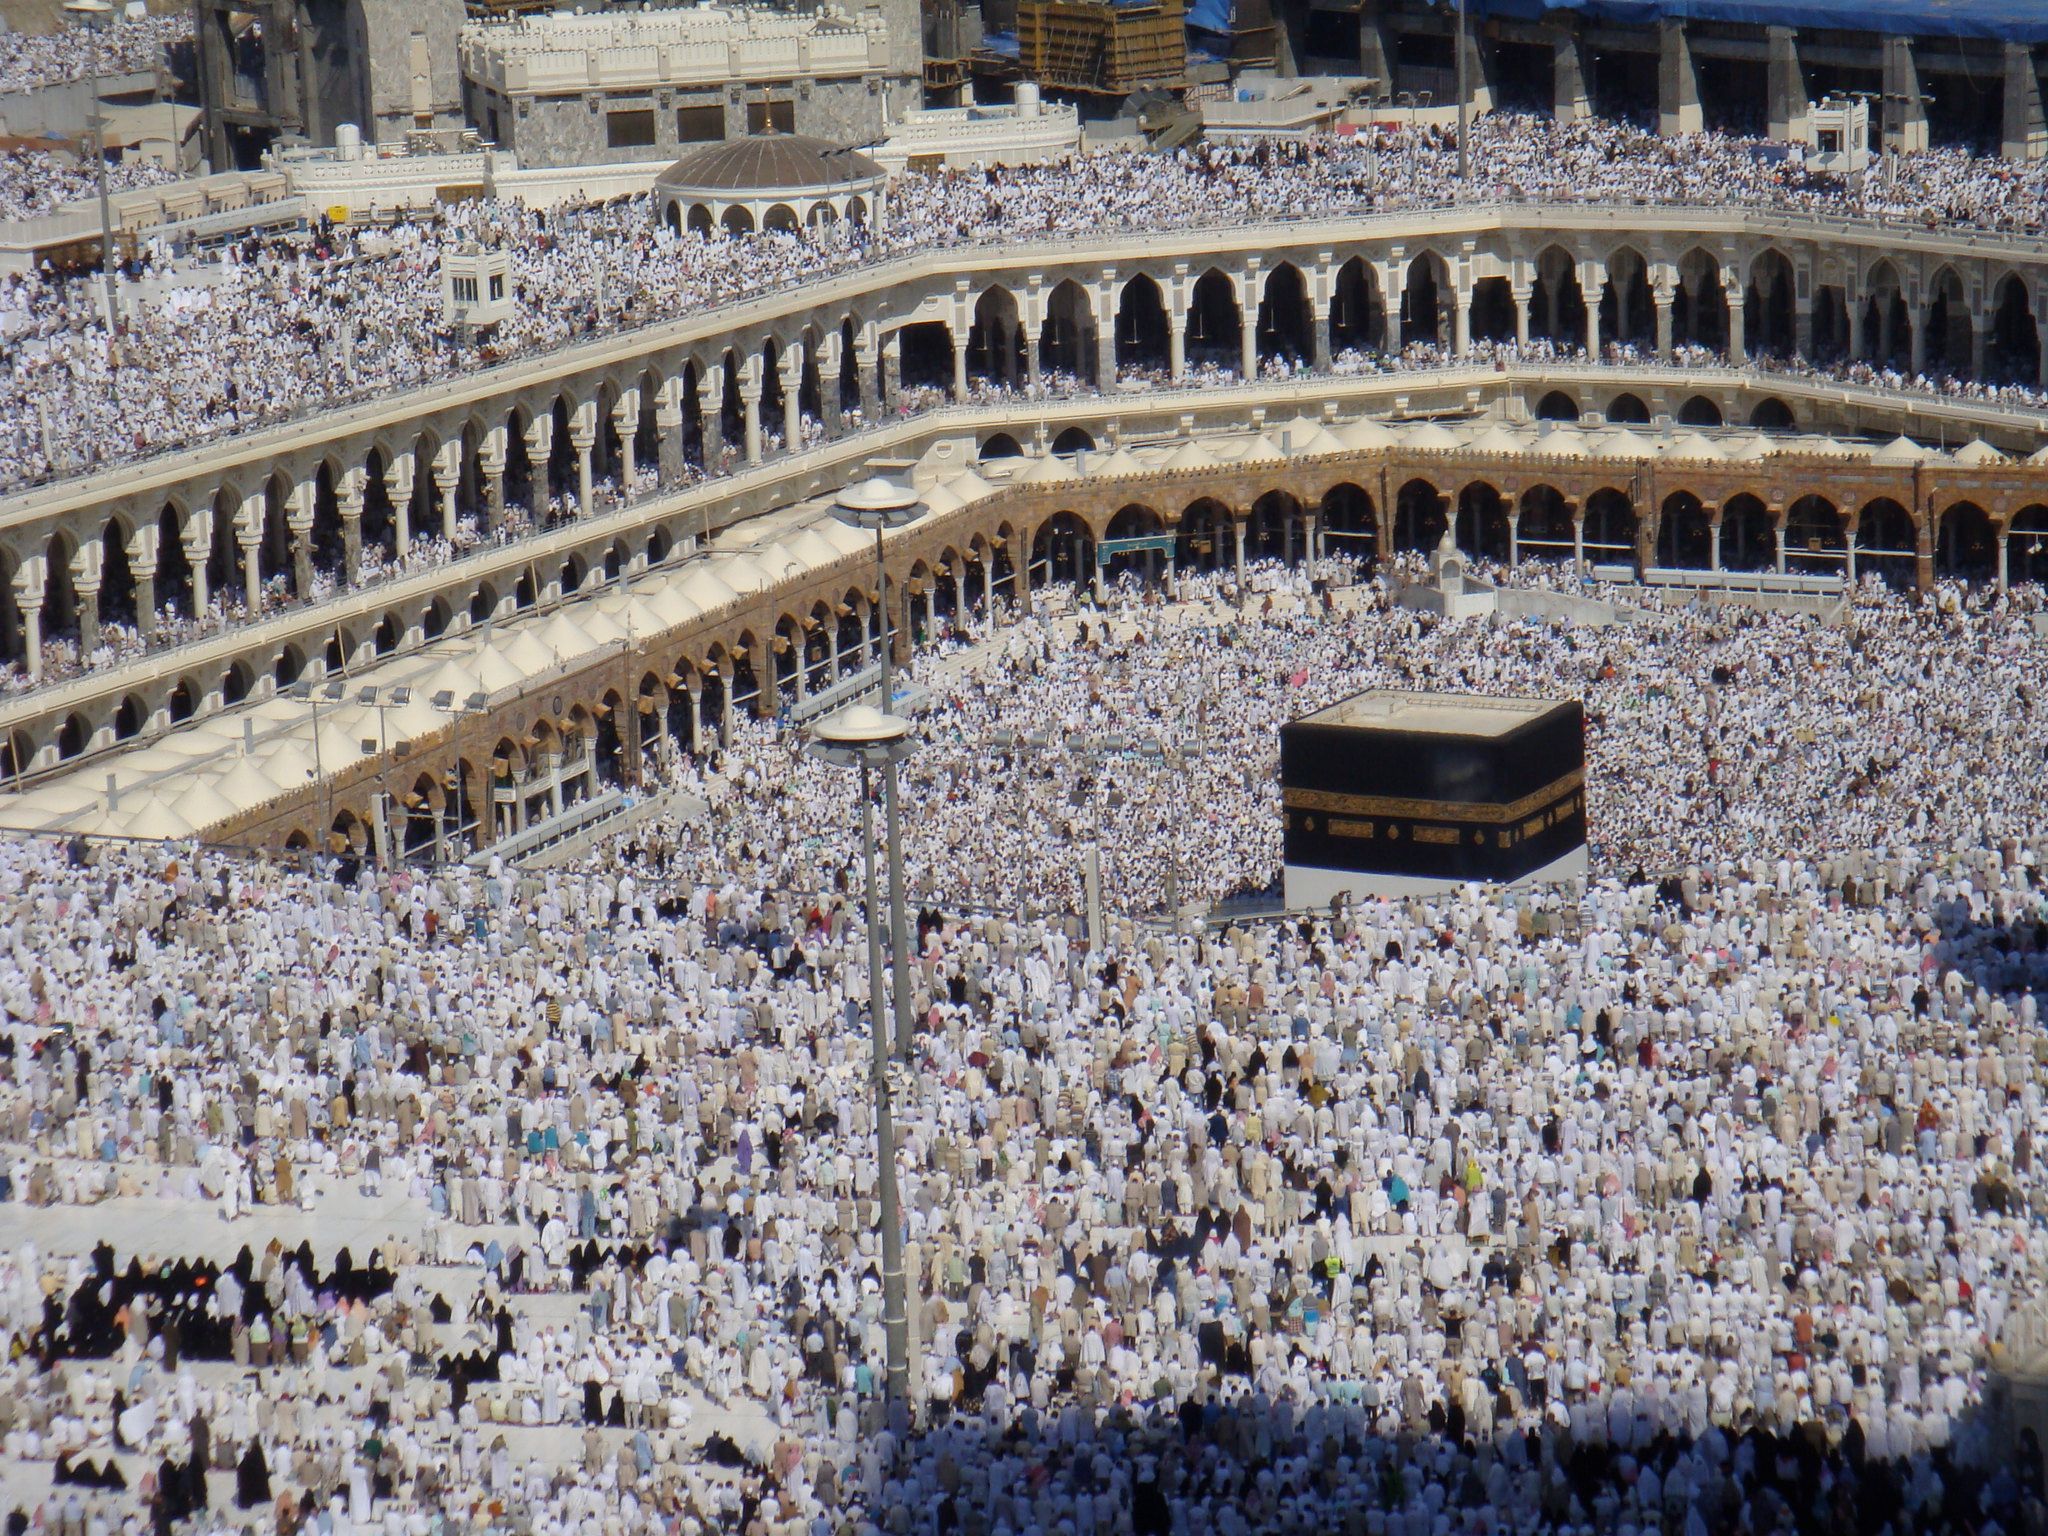 The Kaaba at the start of Hajj